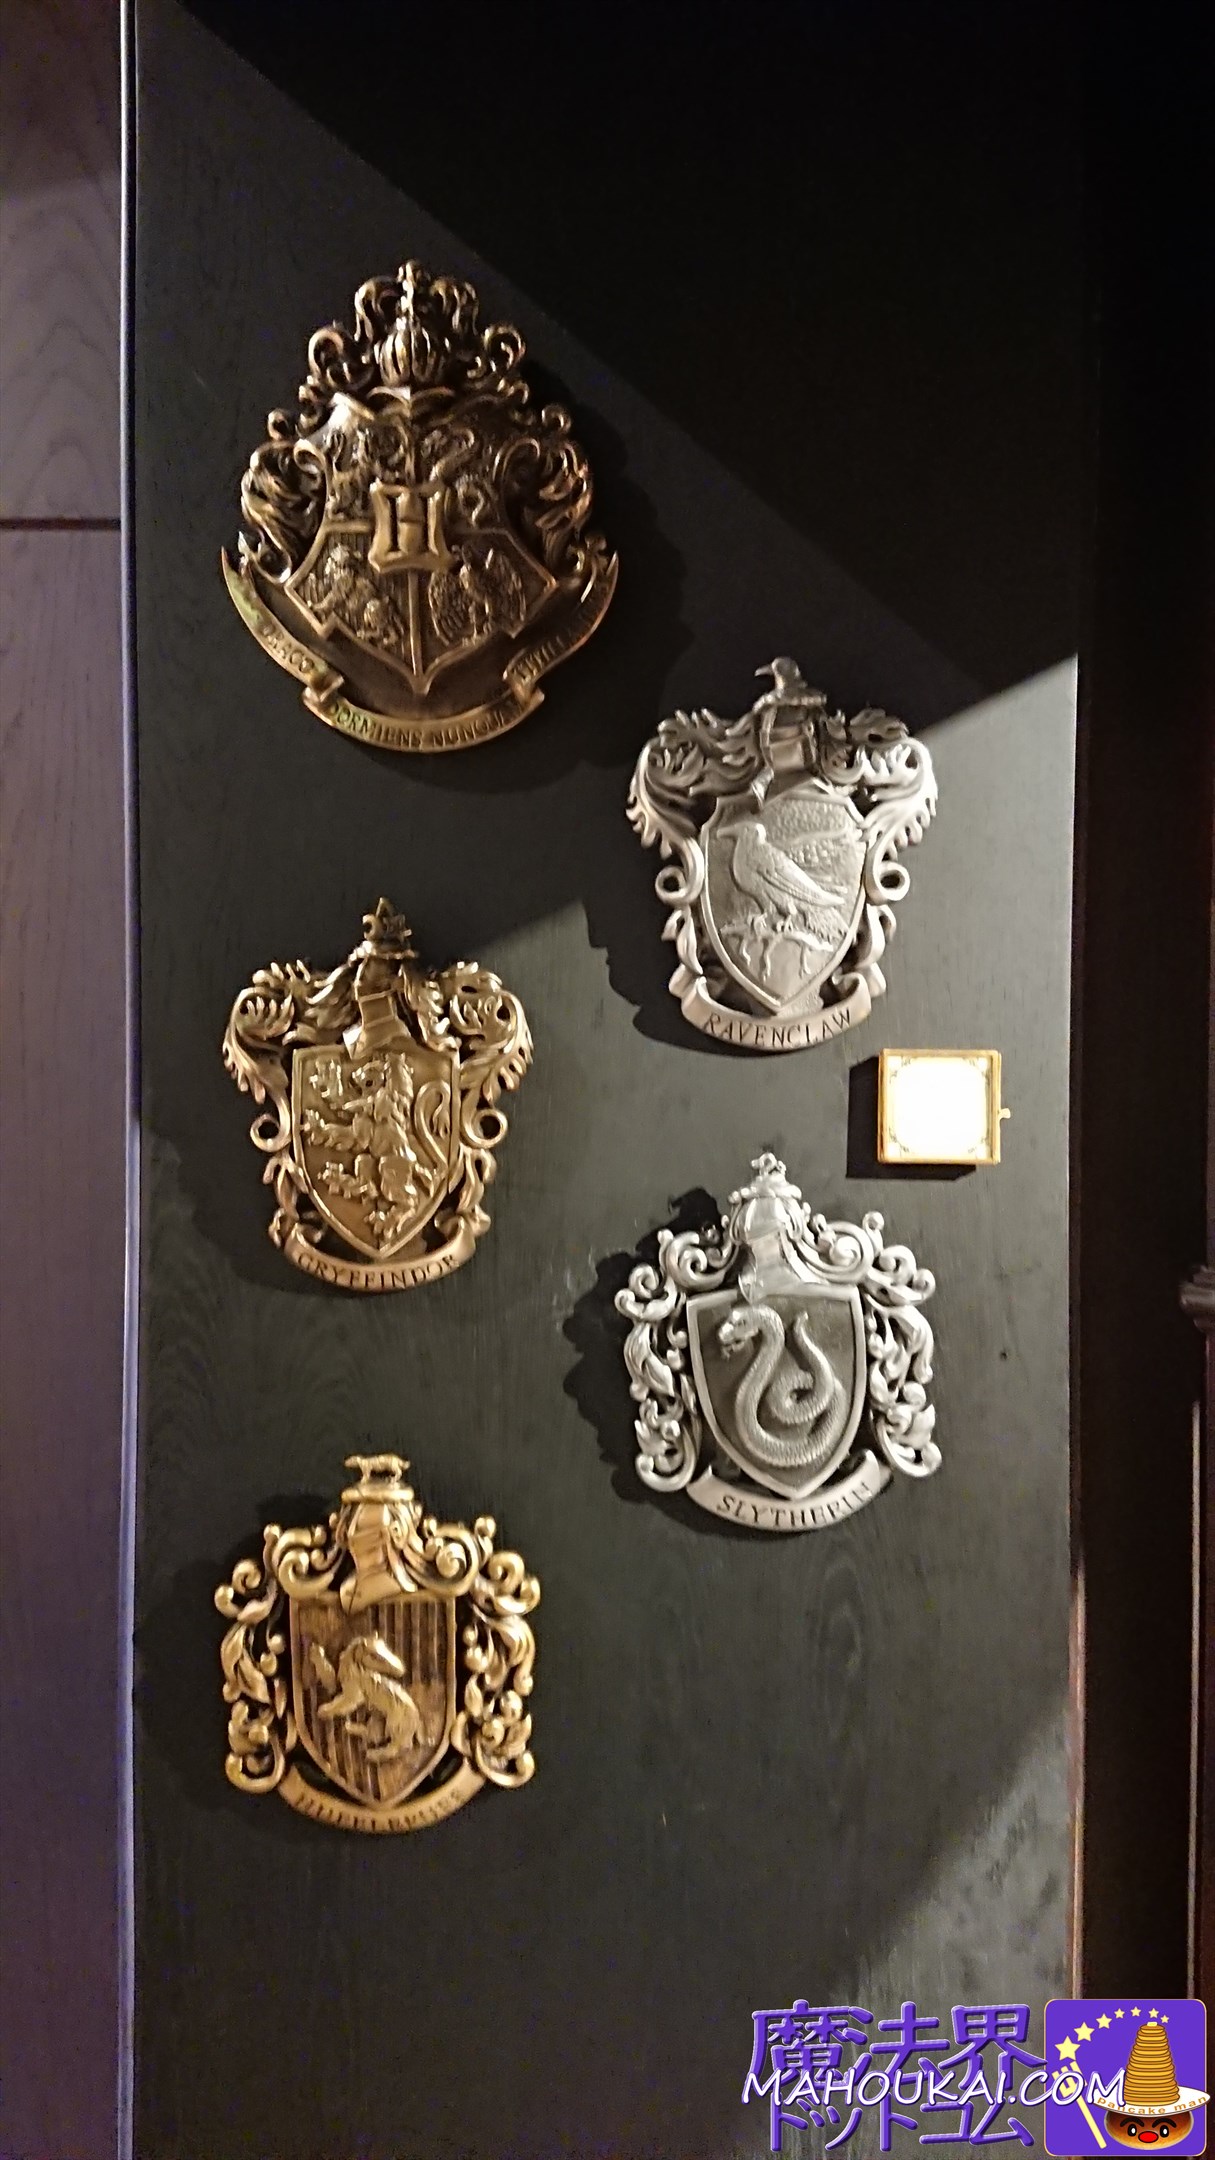 Various Hogwarts crest wall art Studio Shop Merchandise Shop Harry Potter Studio Tour London (in the studios)